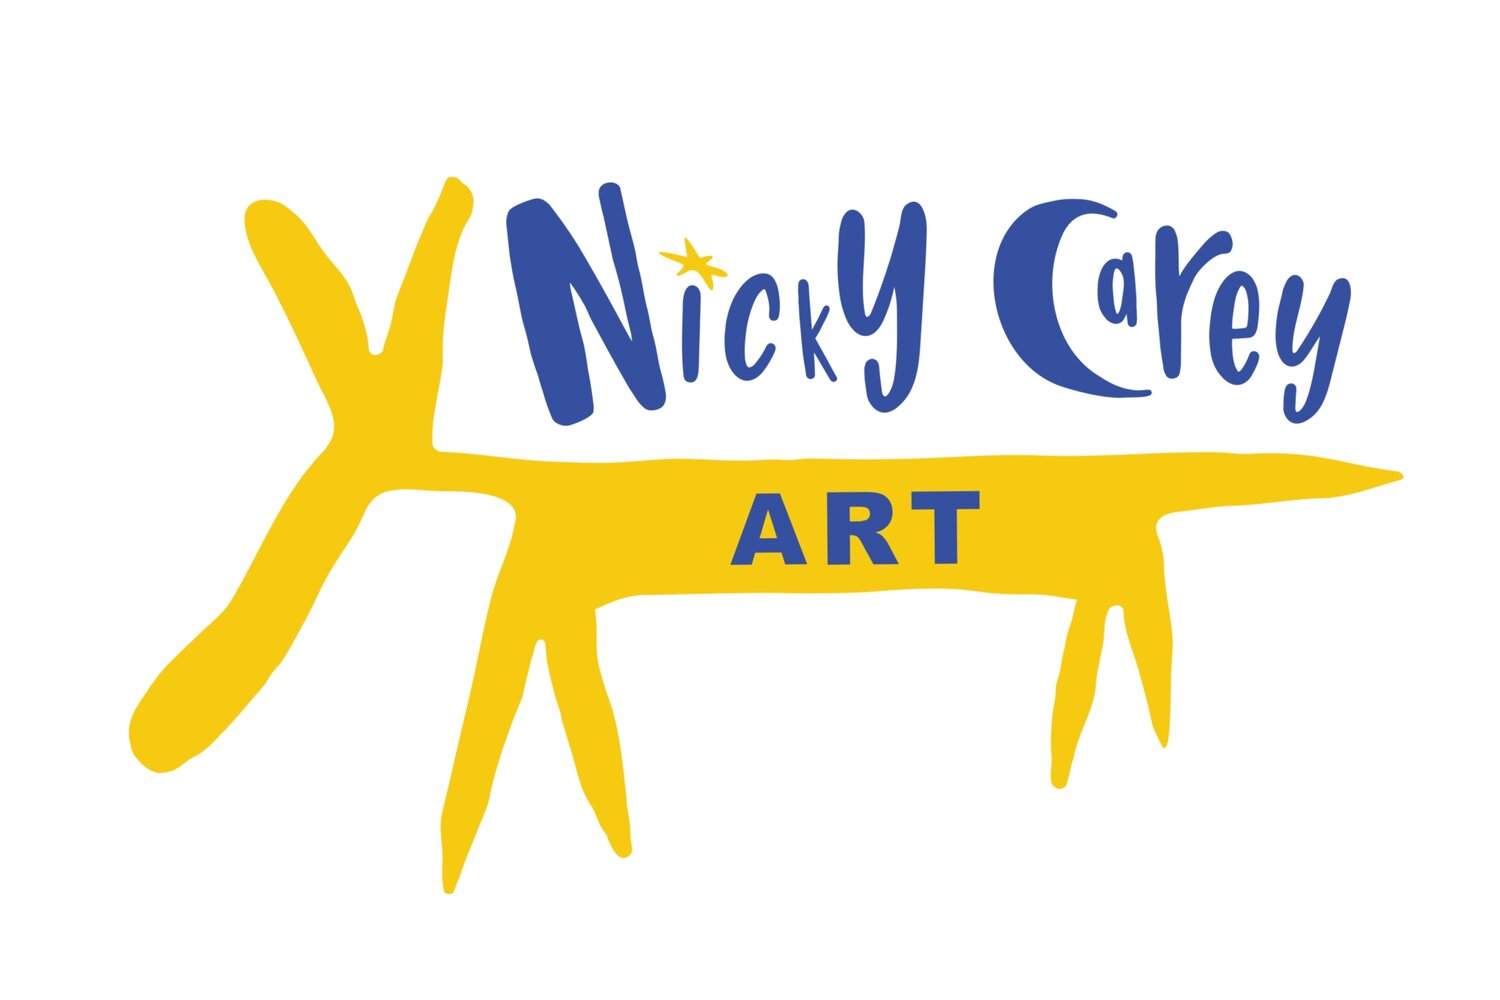 Nicky Carey Art